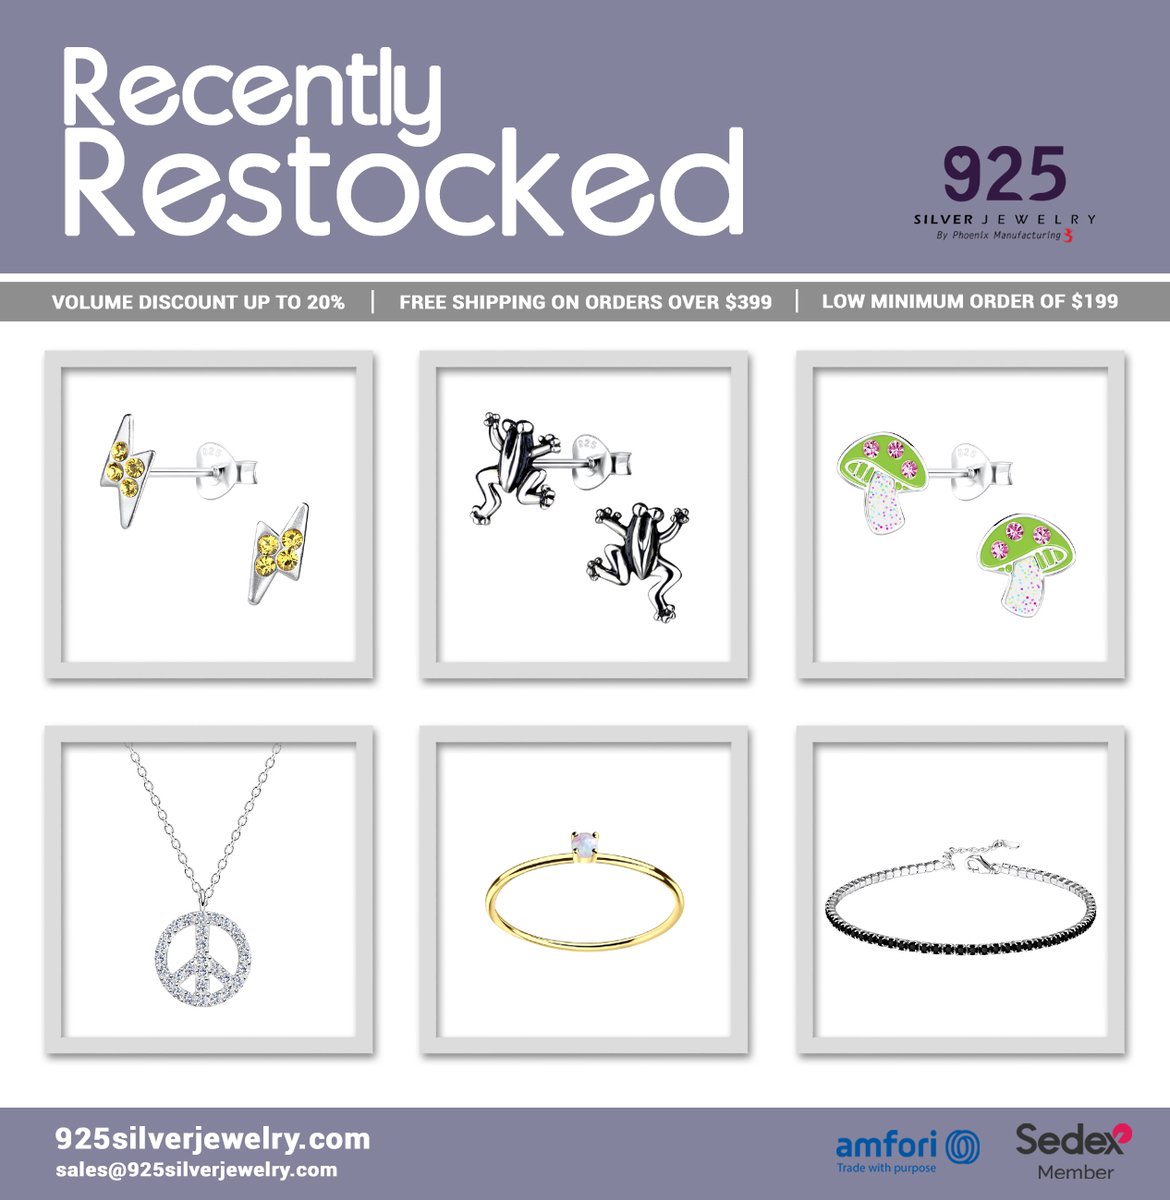 New Designs By 925 Silver Jewelry, Stock Up Now! 💎 

Visit: 925silverjewelry.com/recently-resto…

#jewelrytrend #wholesalejewelry #925silver #sterlingsilverjewelry